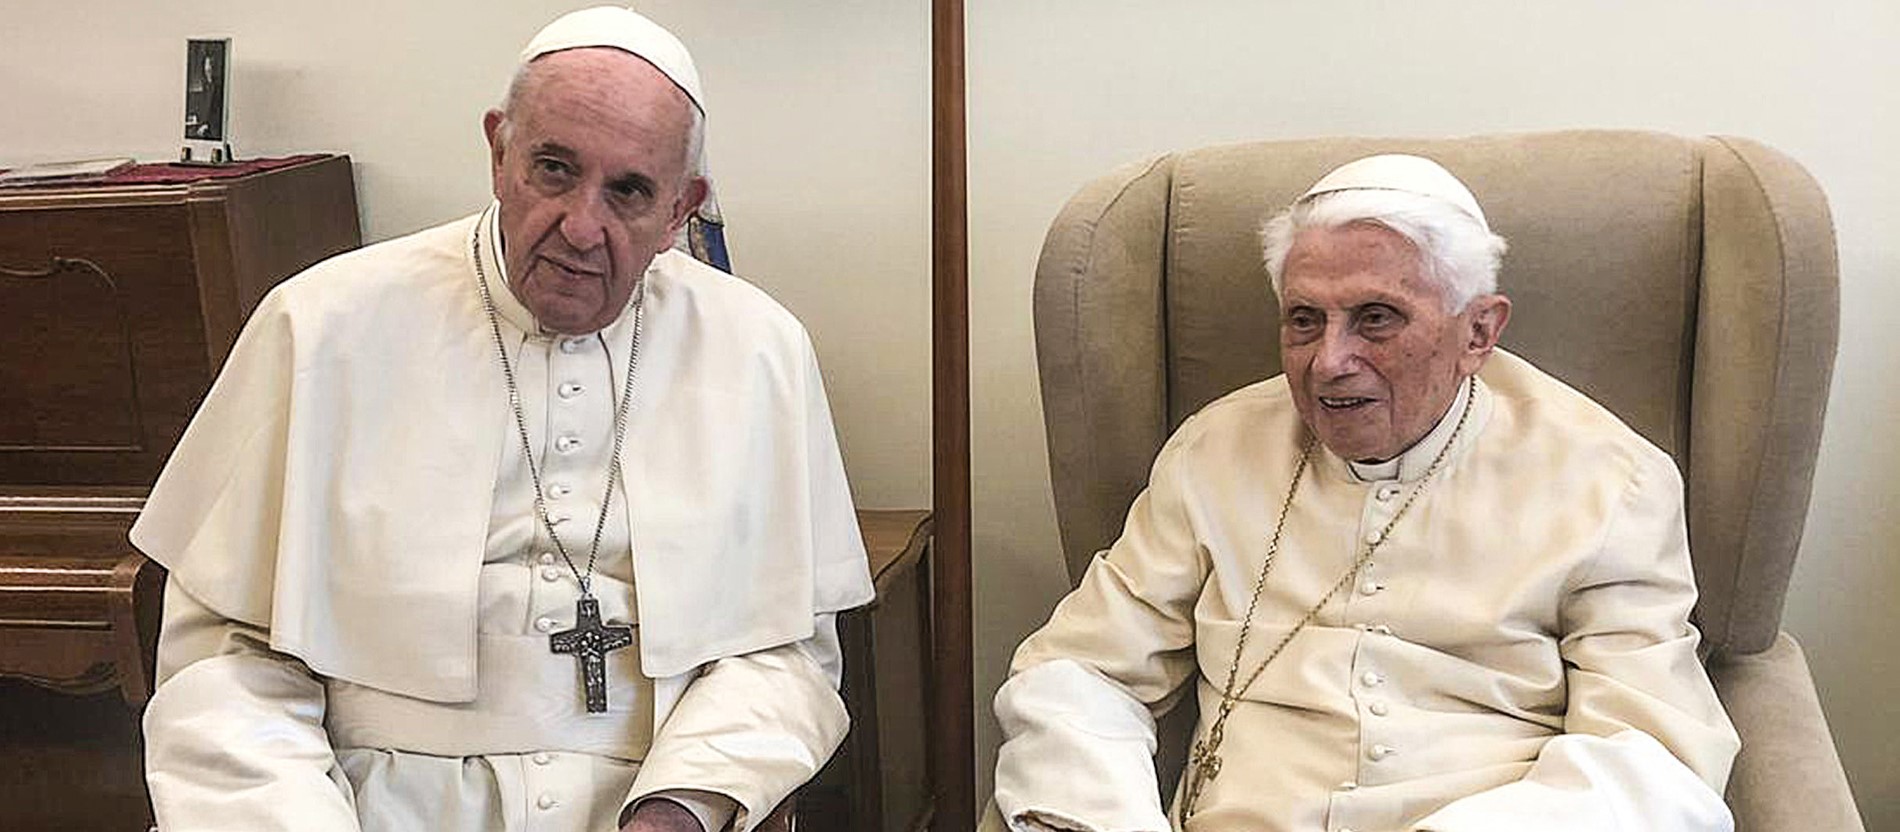 Papst em. Benedikt und Papst Franziskus @ katholisch.de (c) katholisch.de